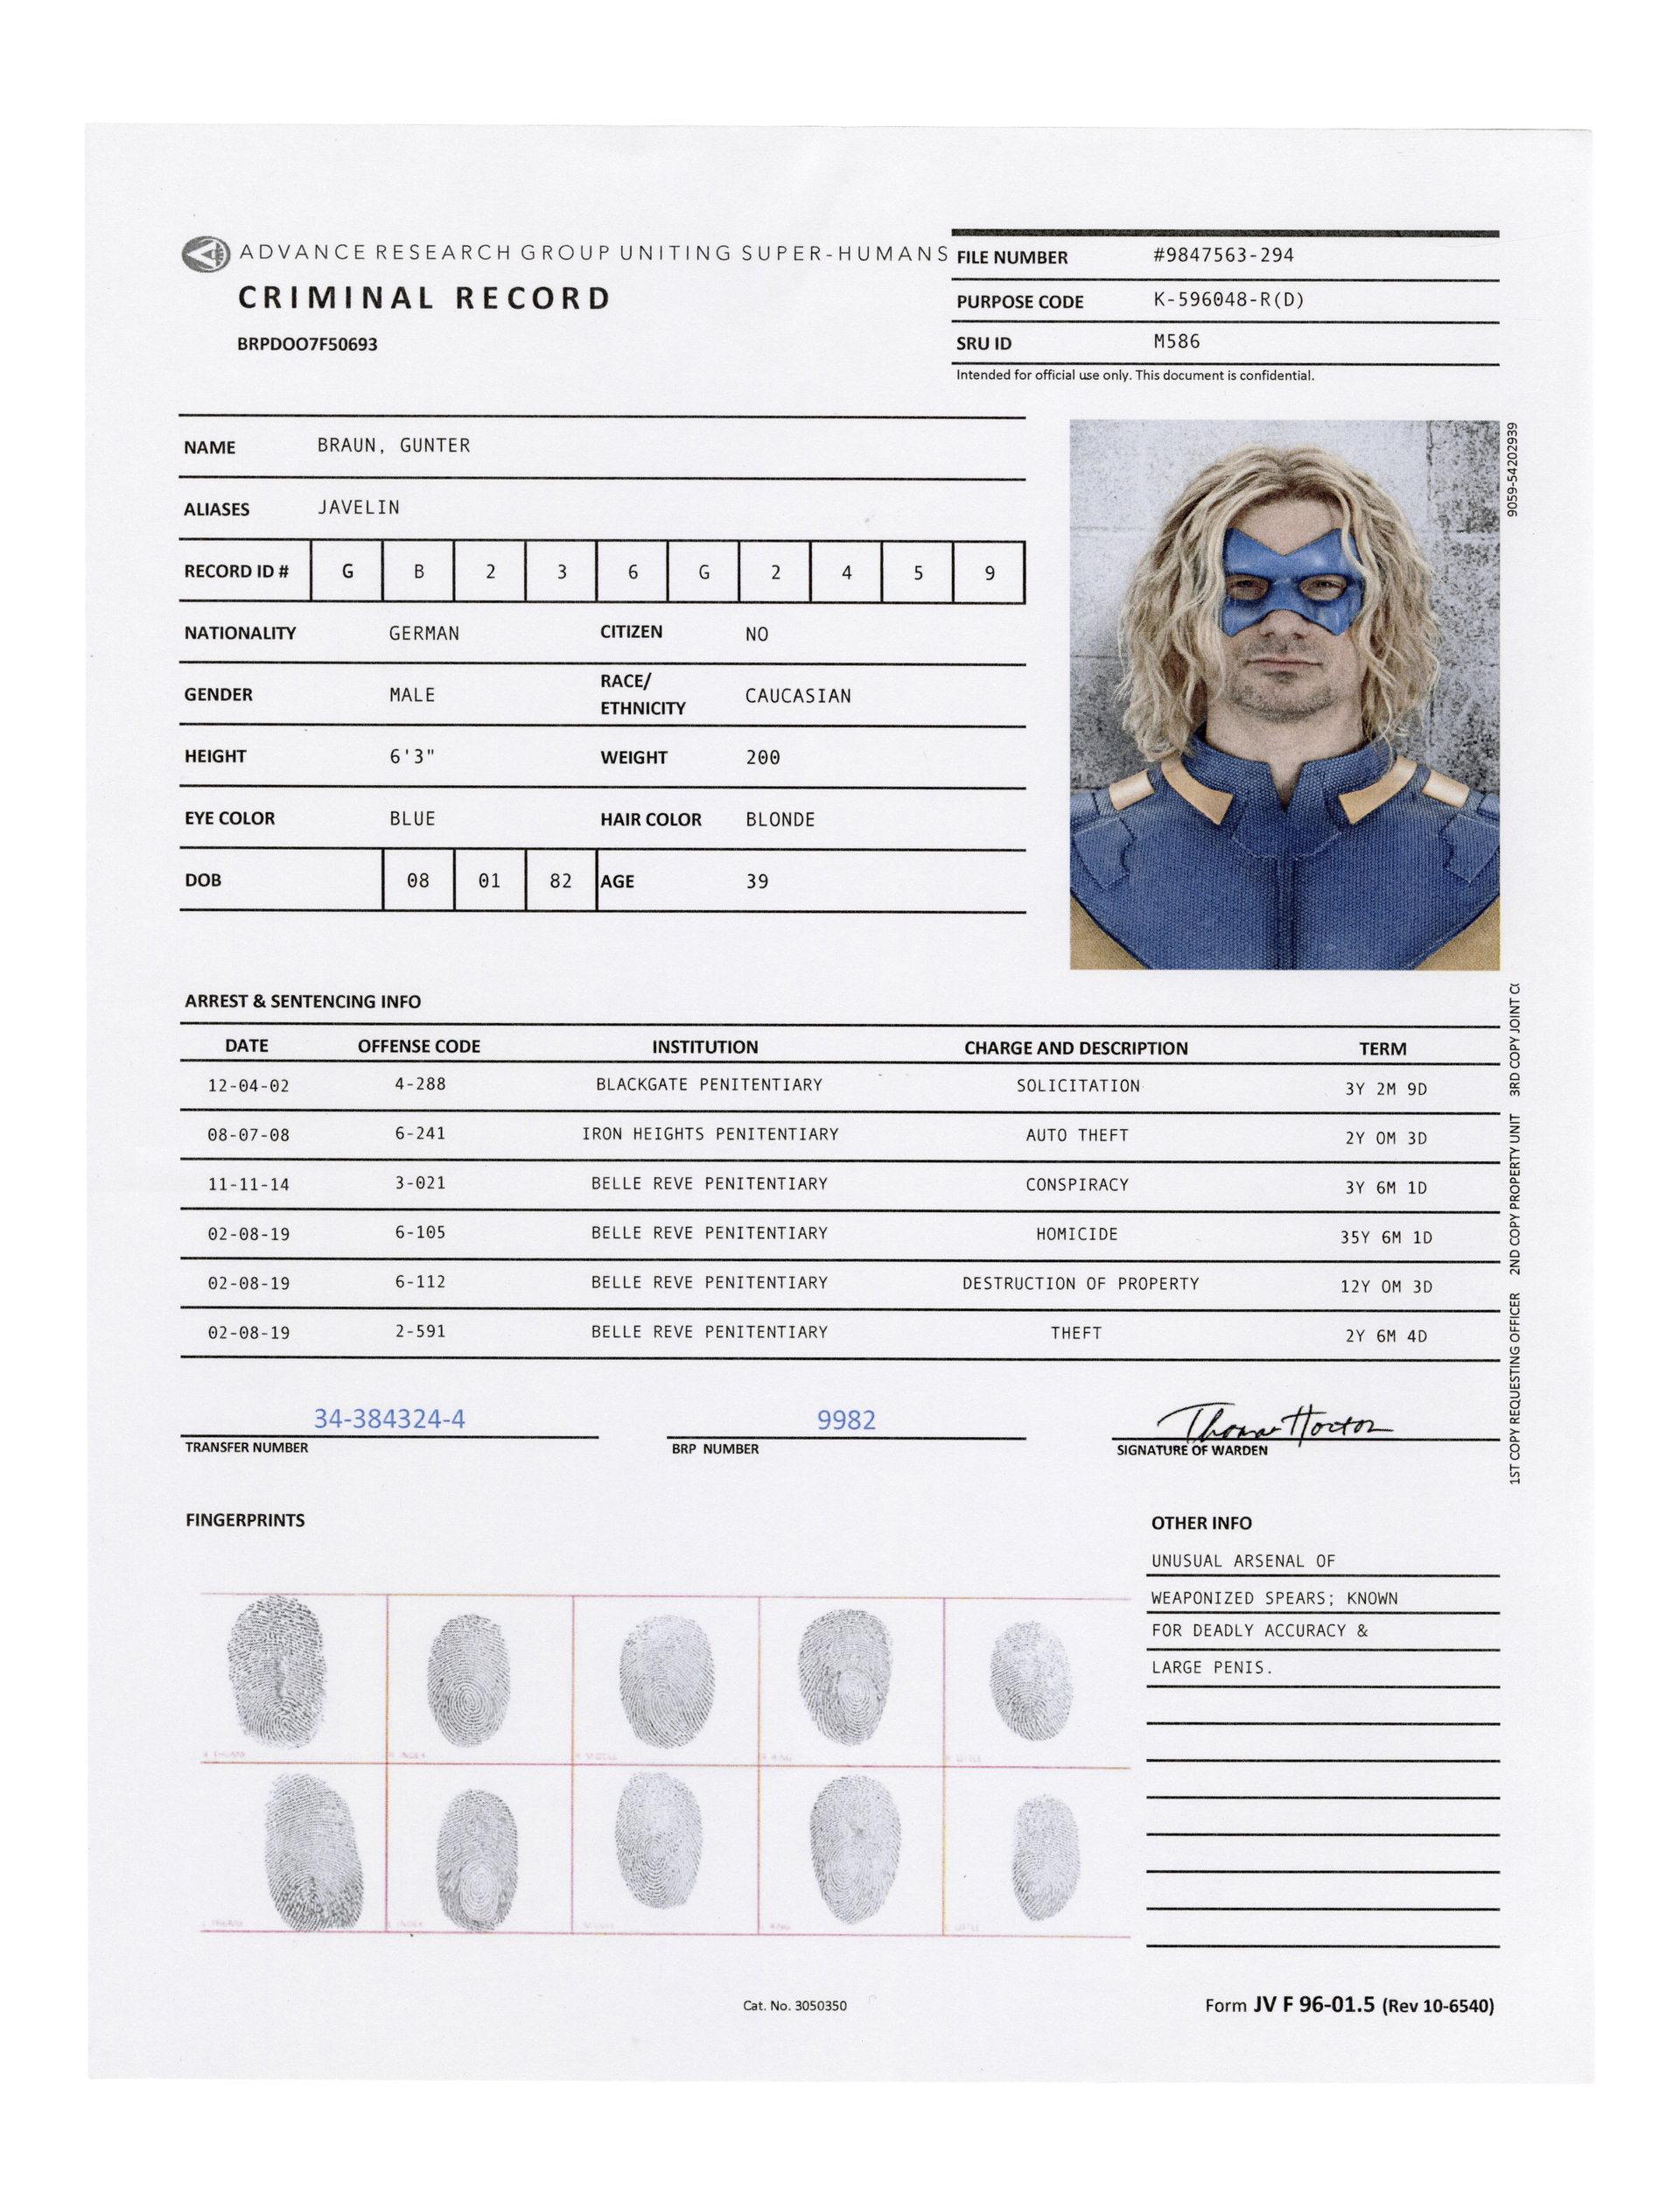 THE SUICIDE SQUAD (2021) - Amanda Waller's (Viola Davis) A.R.G.U.S. Suicide Squad Files - Image 8 of 9